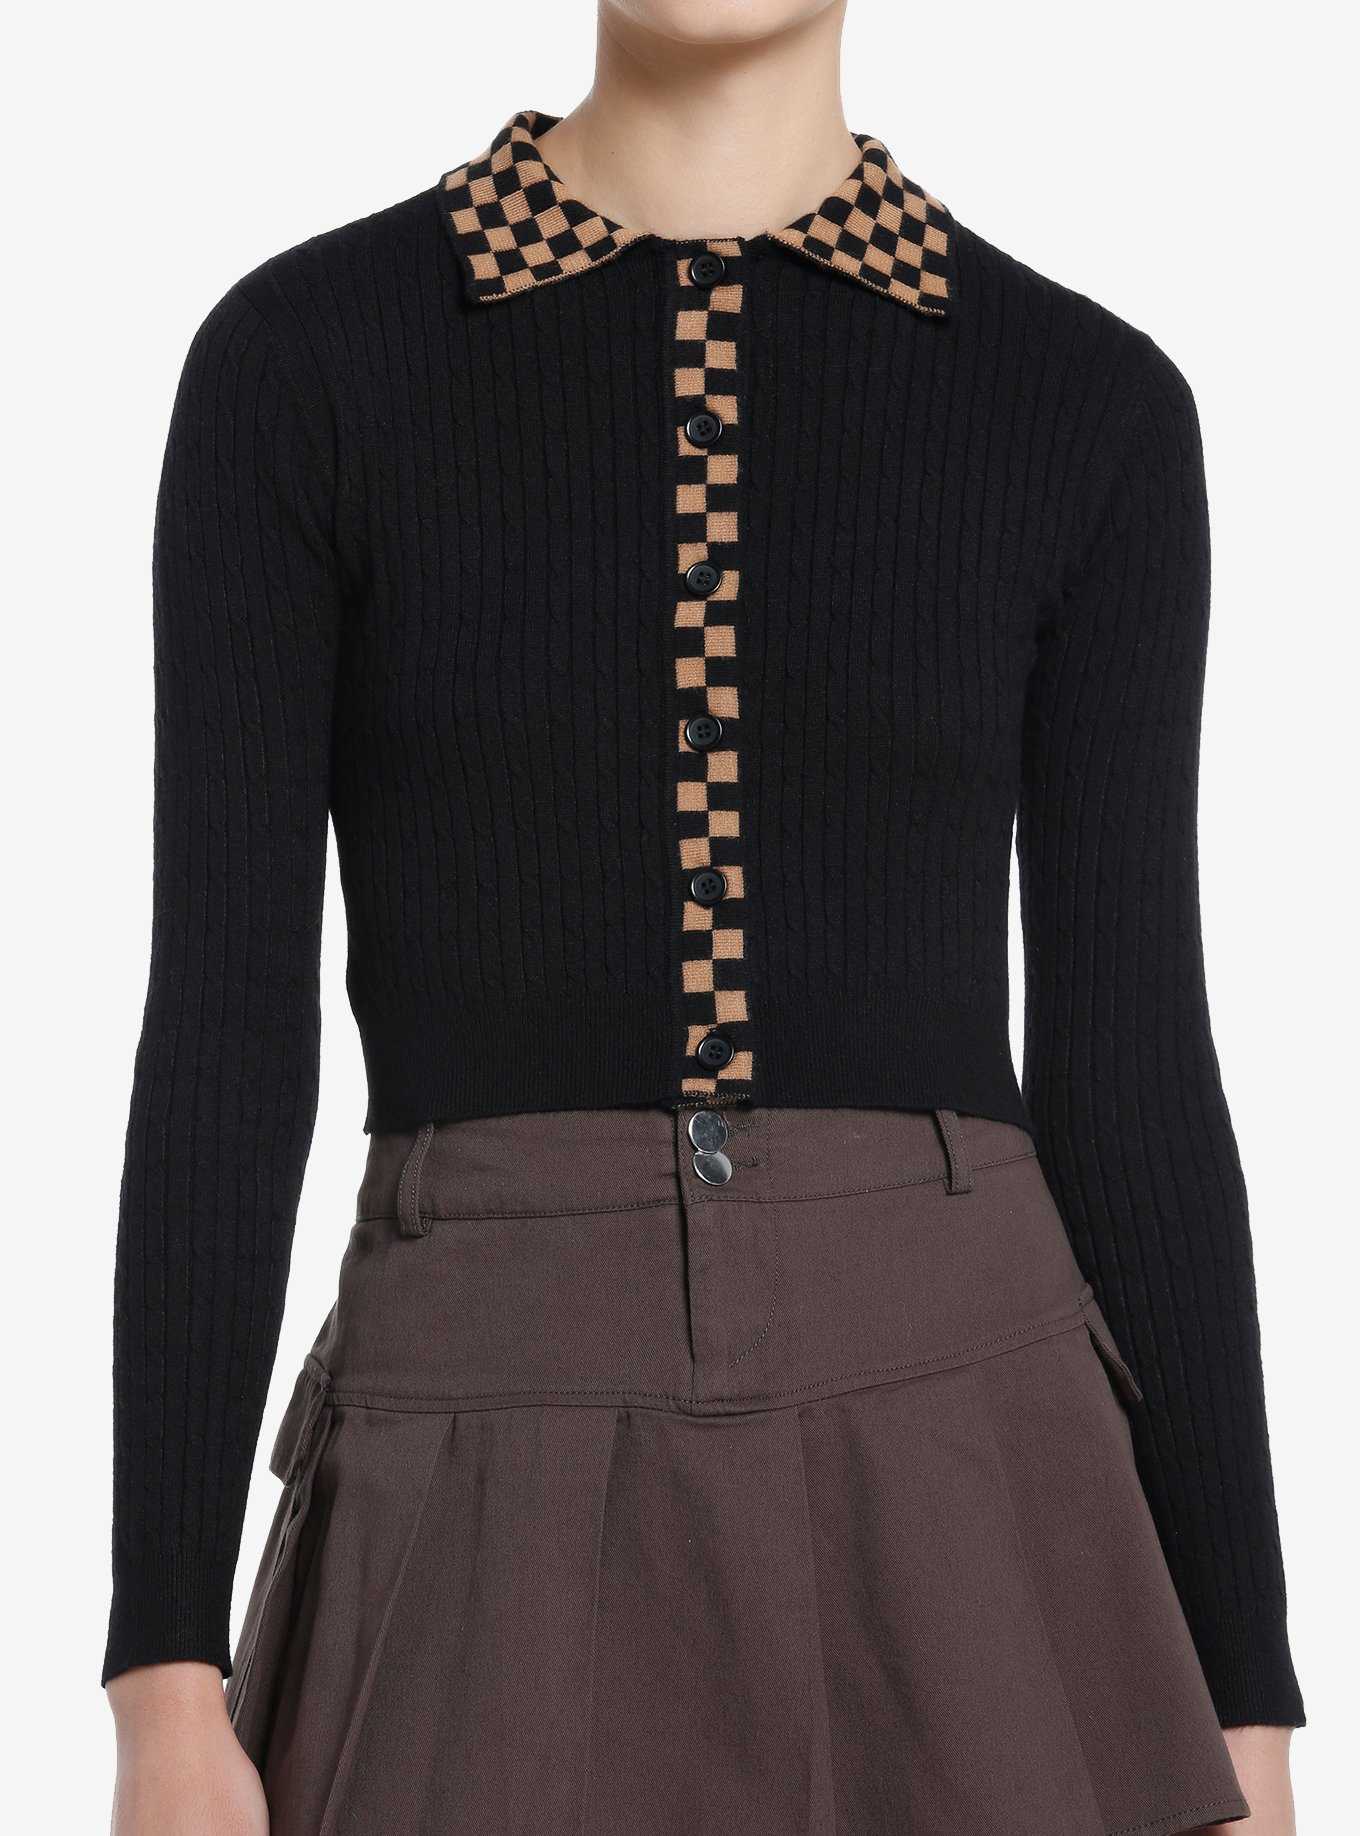 Social Collision Brown & Black Checkered Knit Girls Long-Sleeve Top, , hi-res